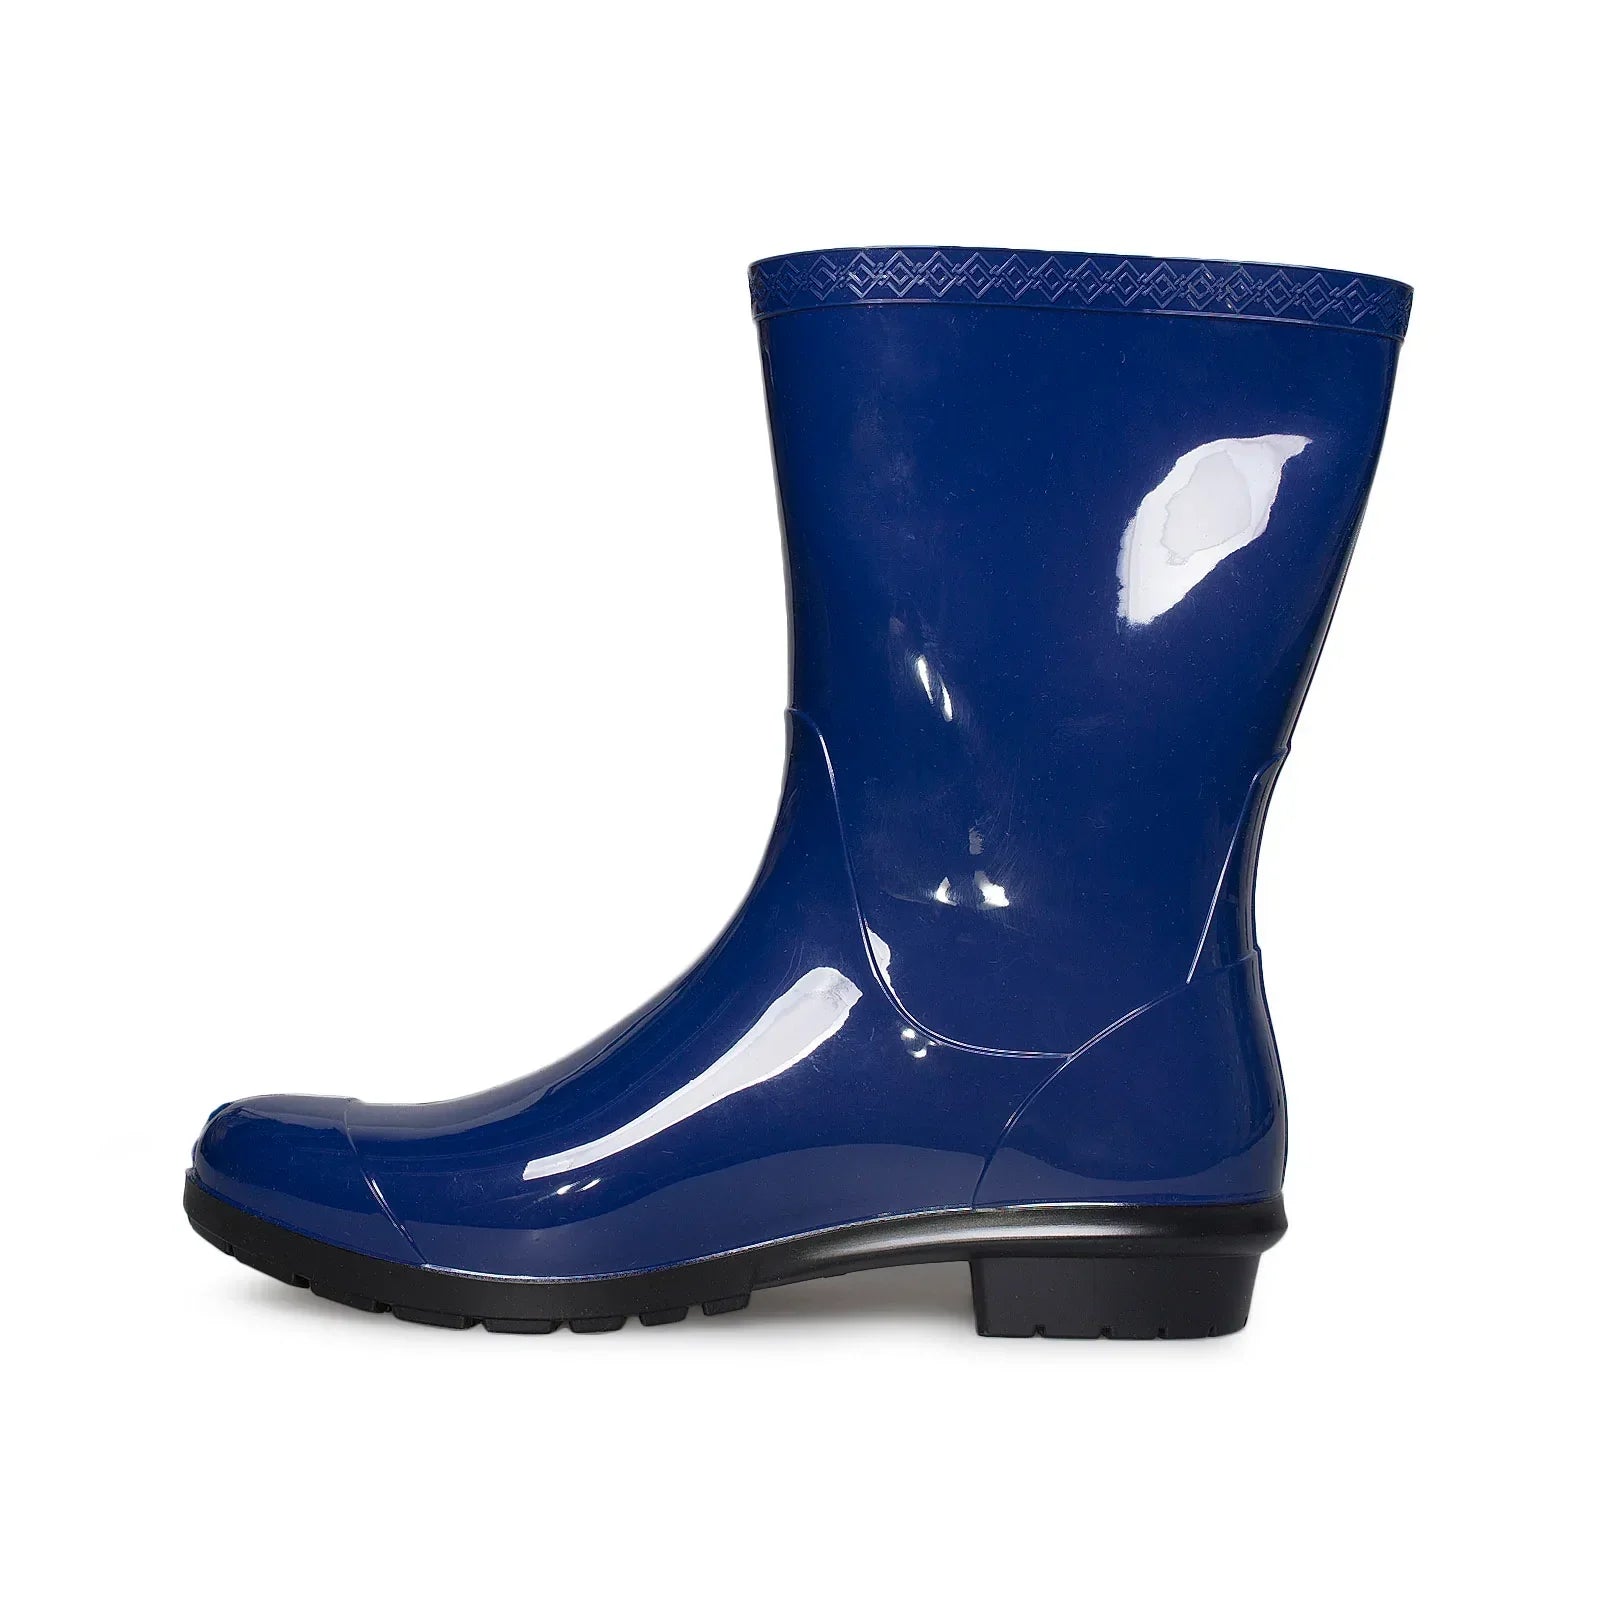 UGG Sienna Blue Jay Rain Boots - Women's